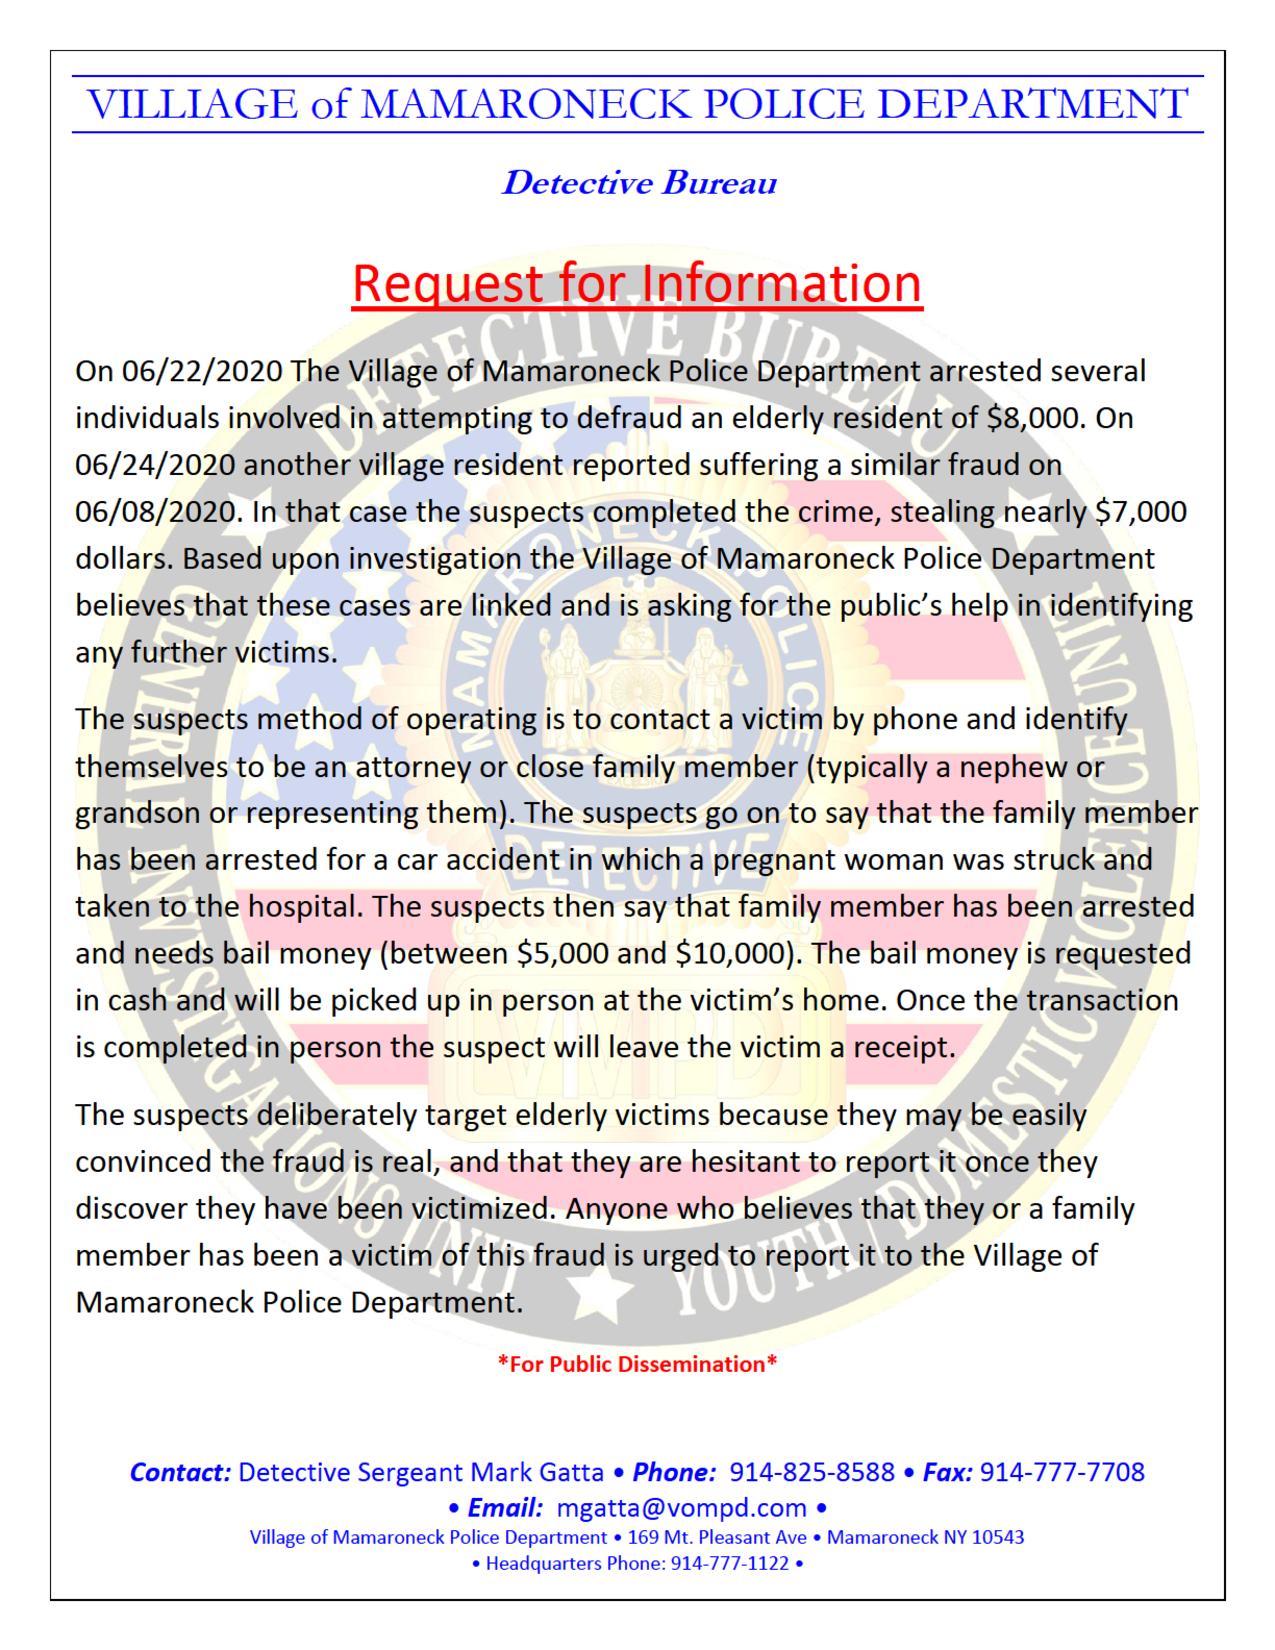 Scam Warning RFI Flyer